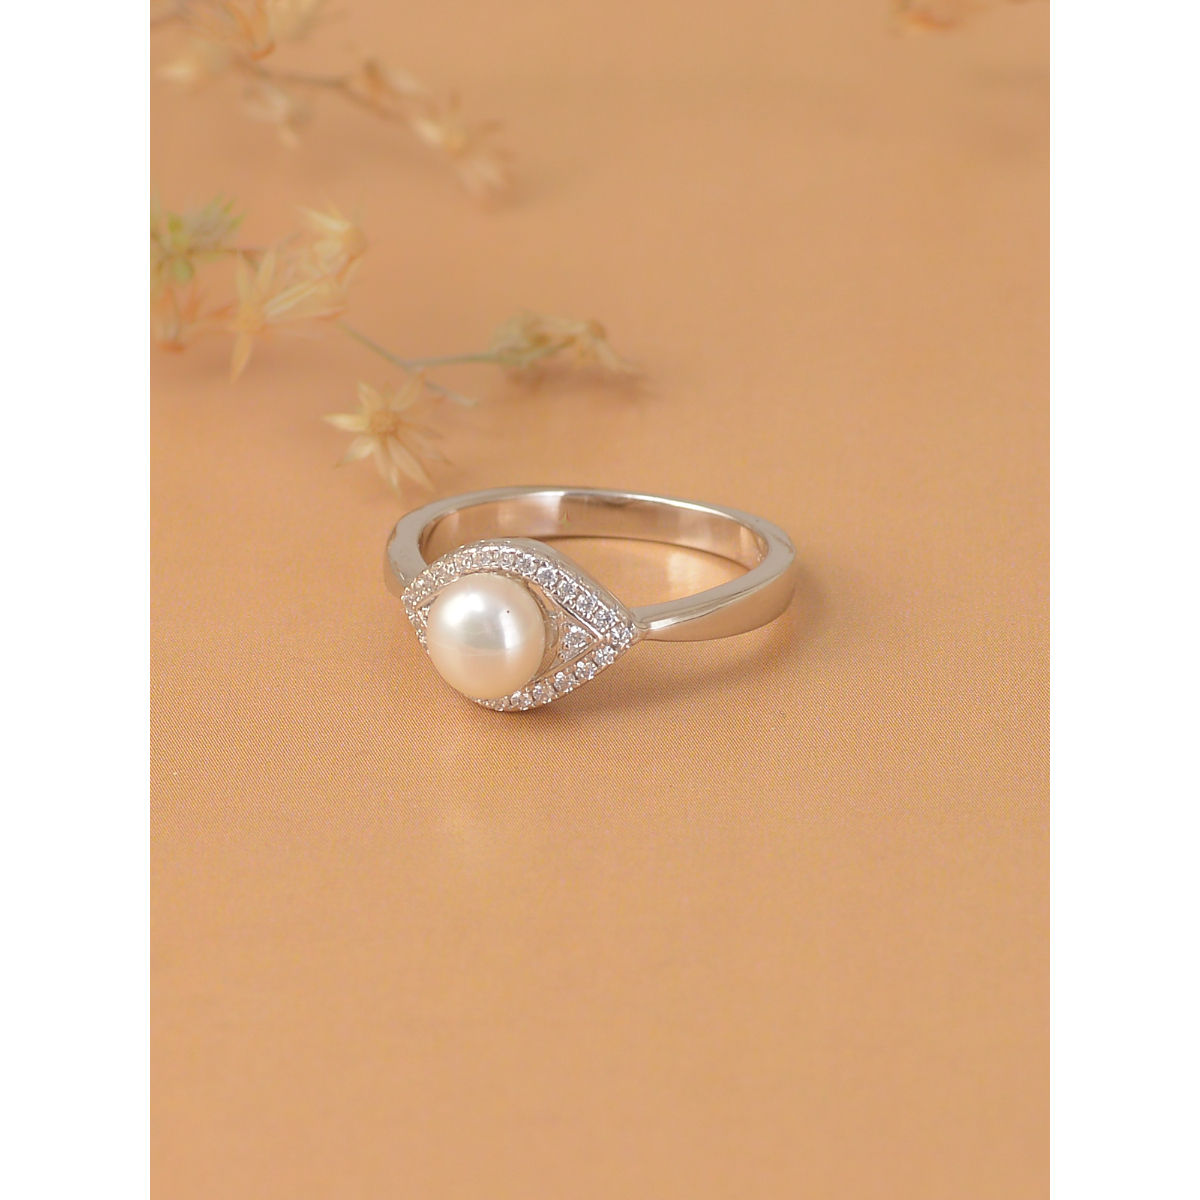 Buy Gemstone Pearl Rings Designs Online in India | Candere by Kalyan  Jewellers